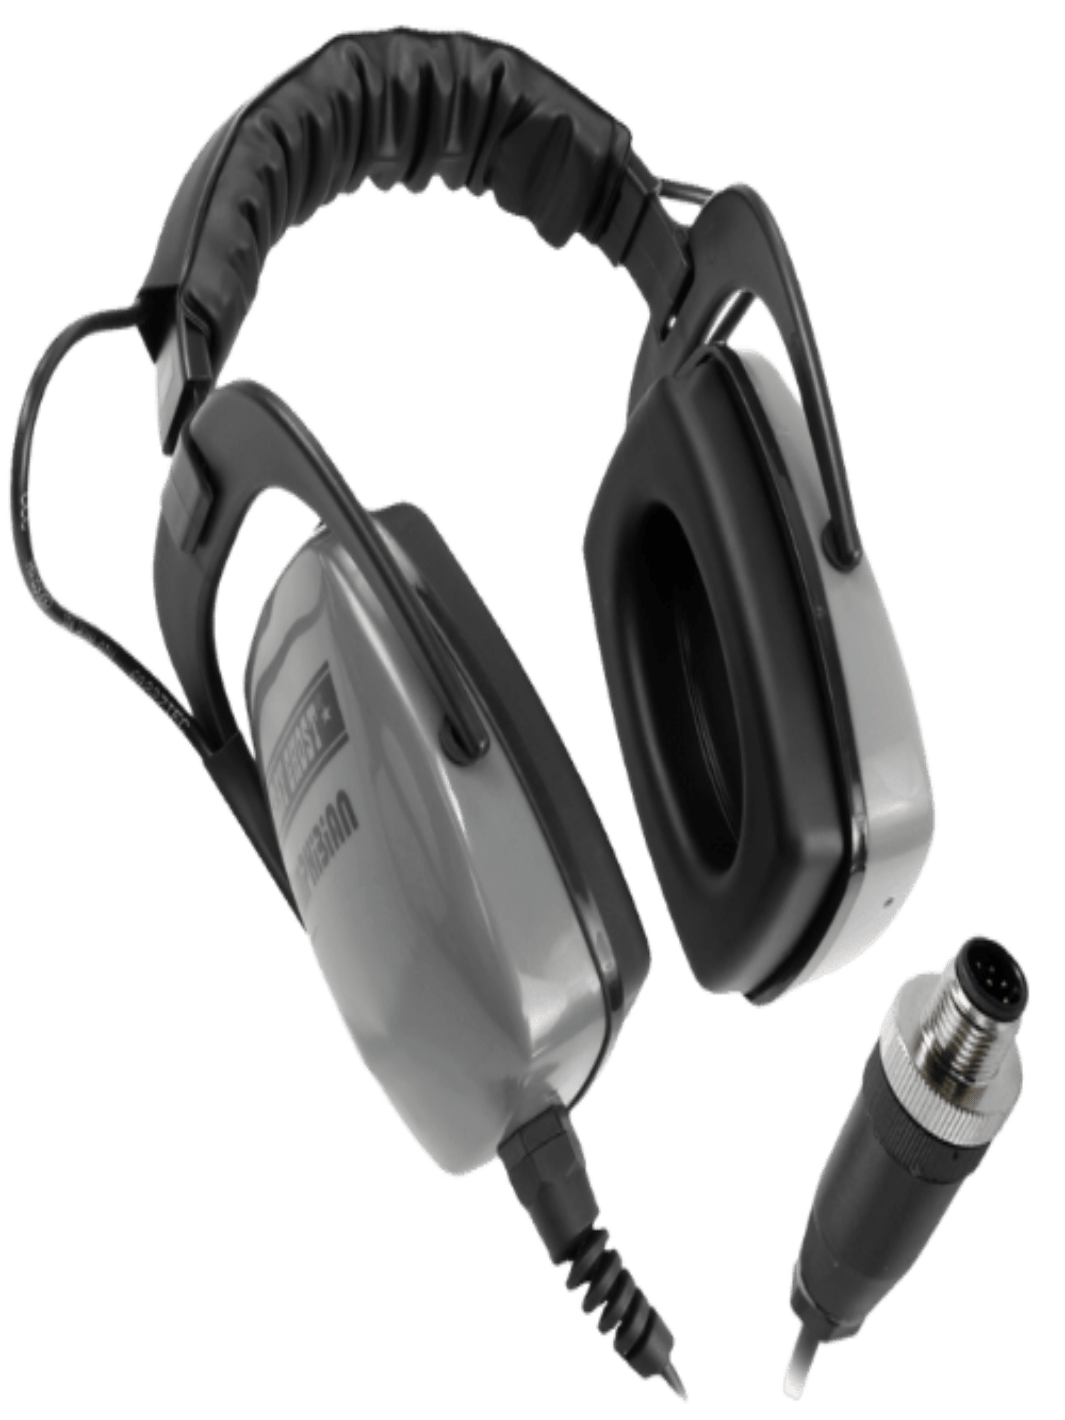 DetectorPro Gray Ghost Amphibian II Headphones for Simplex/Kruzer - Treasure Coast Metal Detectors